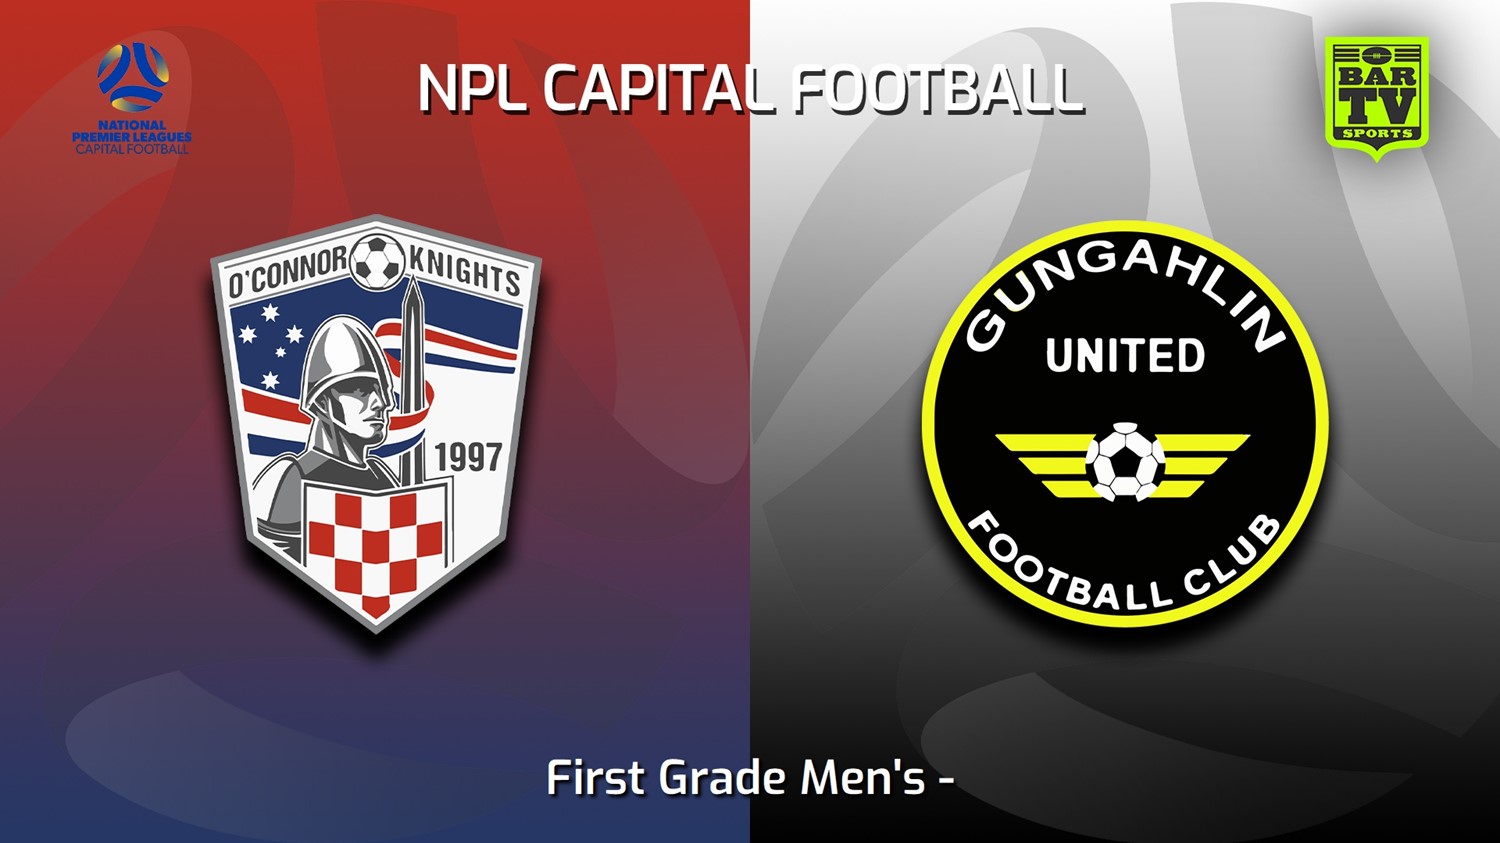 230909-Capital NPL O'Connor Knights SC v Gungahlin United Minigame Slate Image